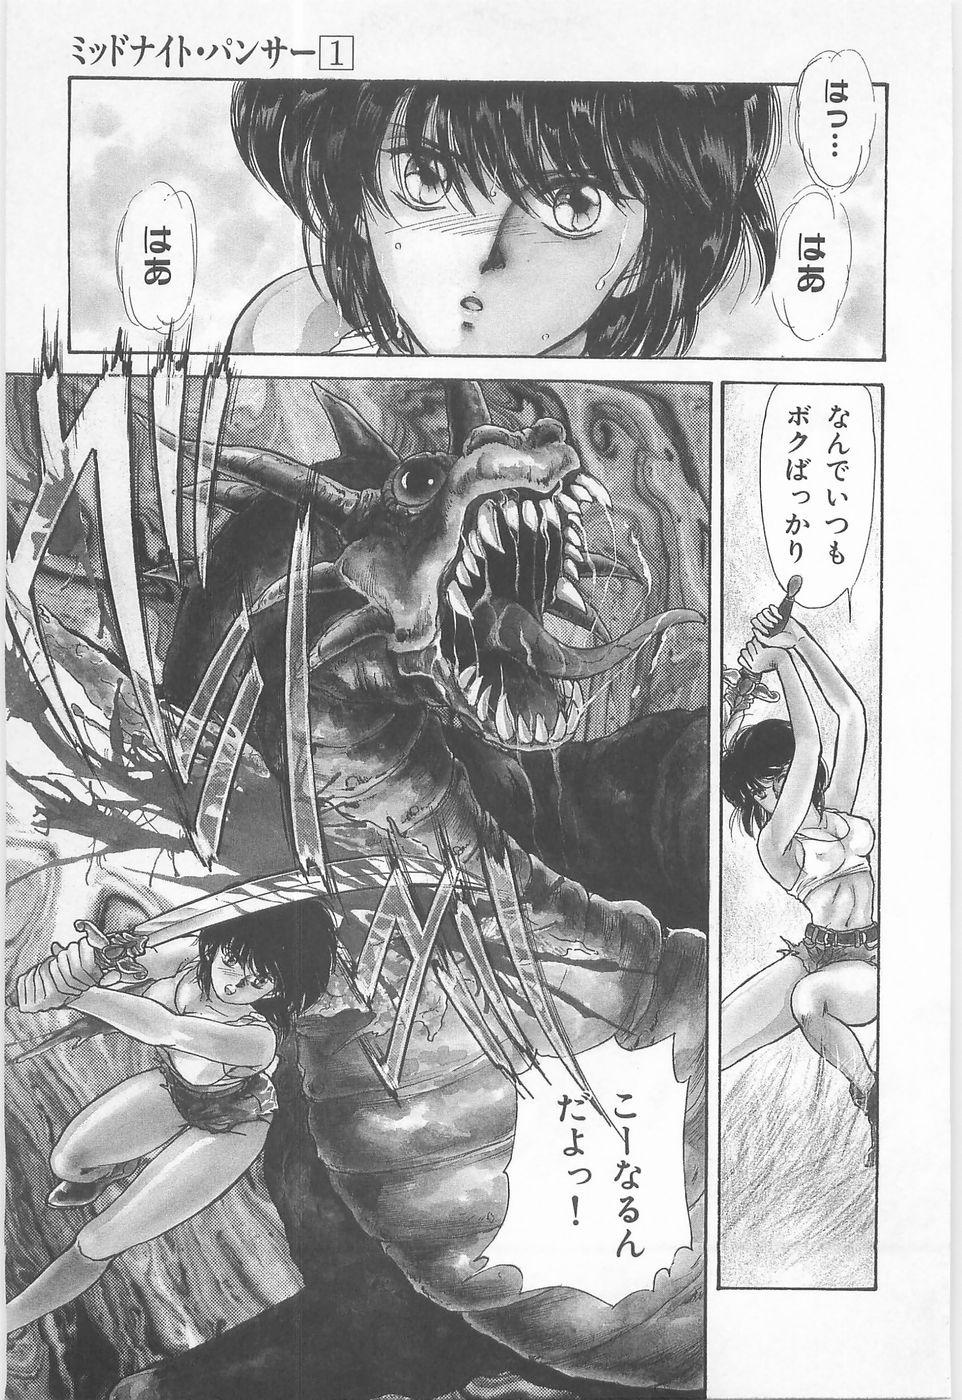 Midnight Panther Volume 1 JPN 6